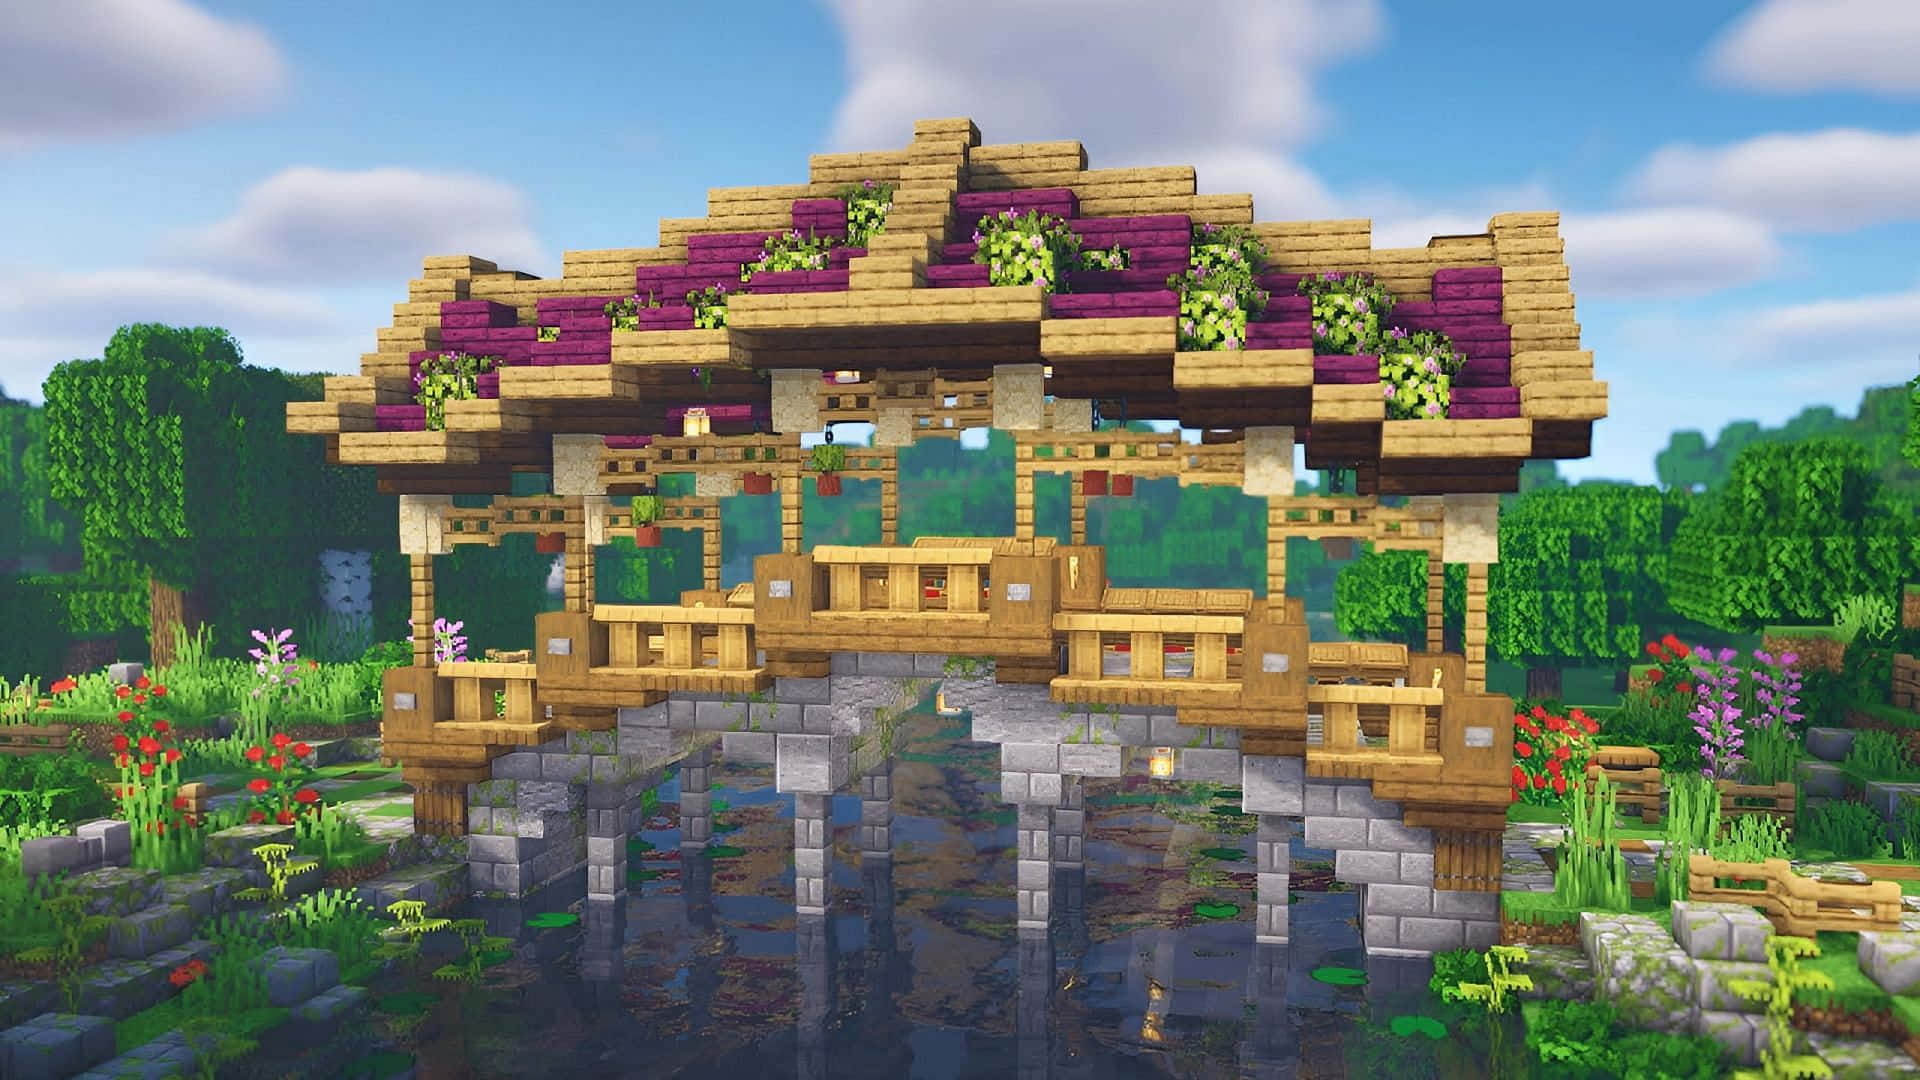 Minecraft Bridge Over River with Stunning Landscape Wallpaper